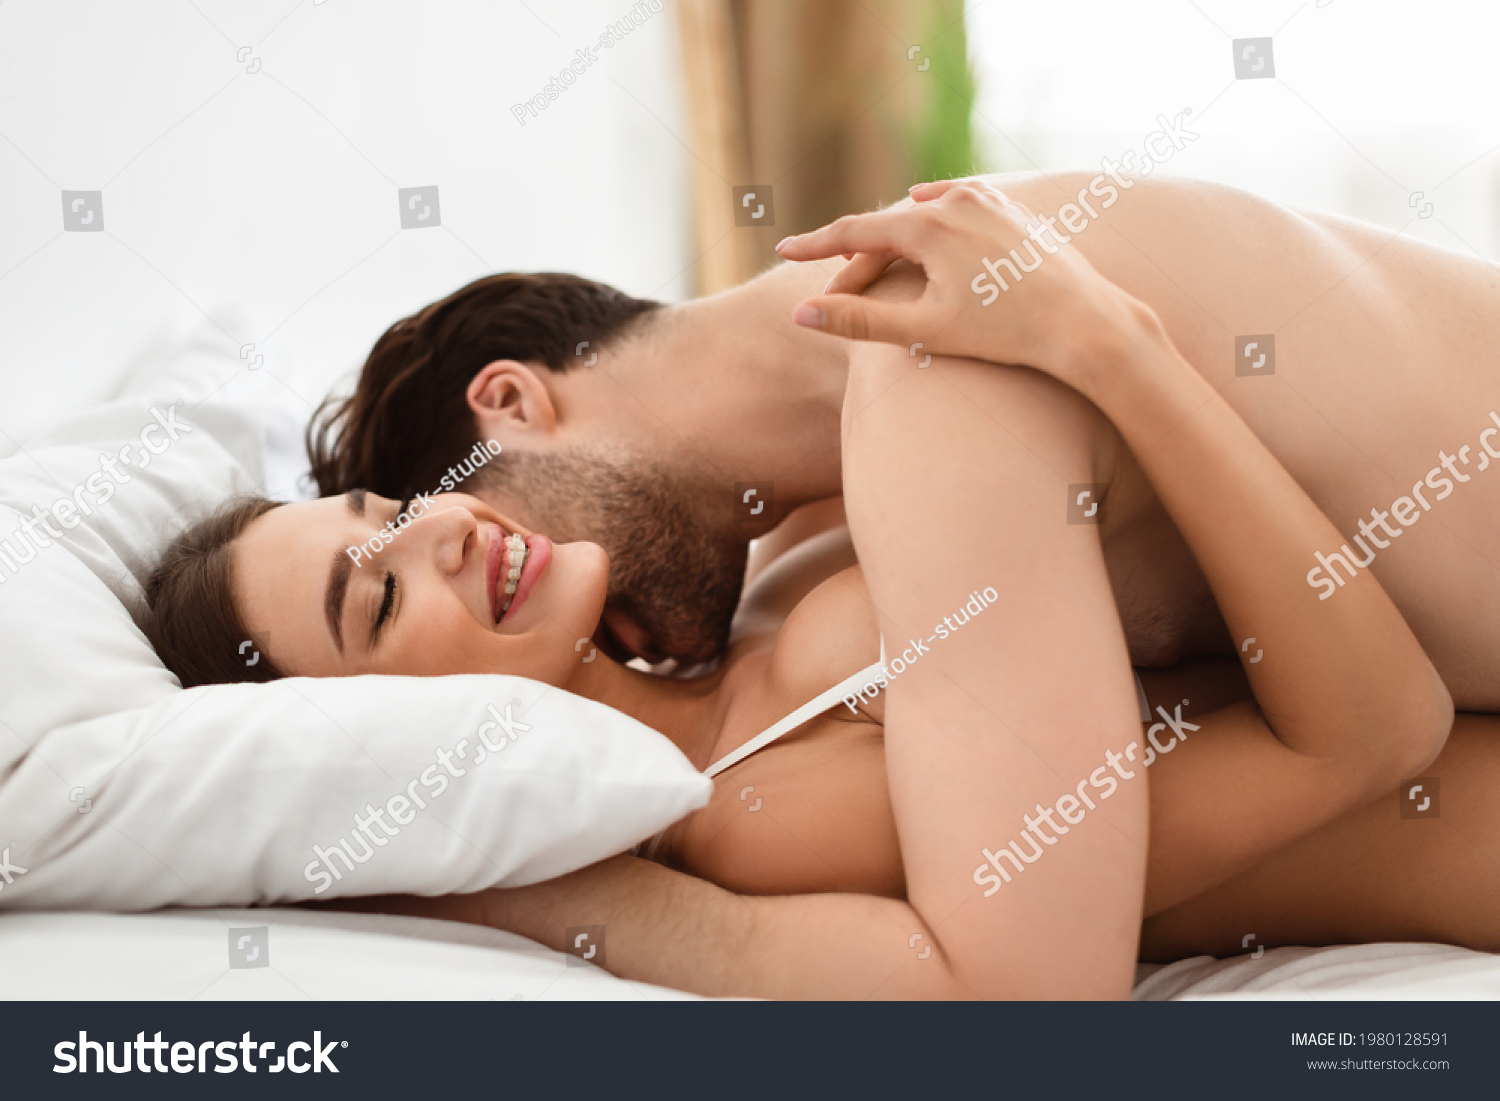 adil gul share husband wife sex pic photos